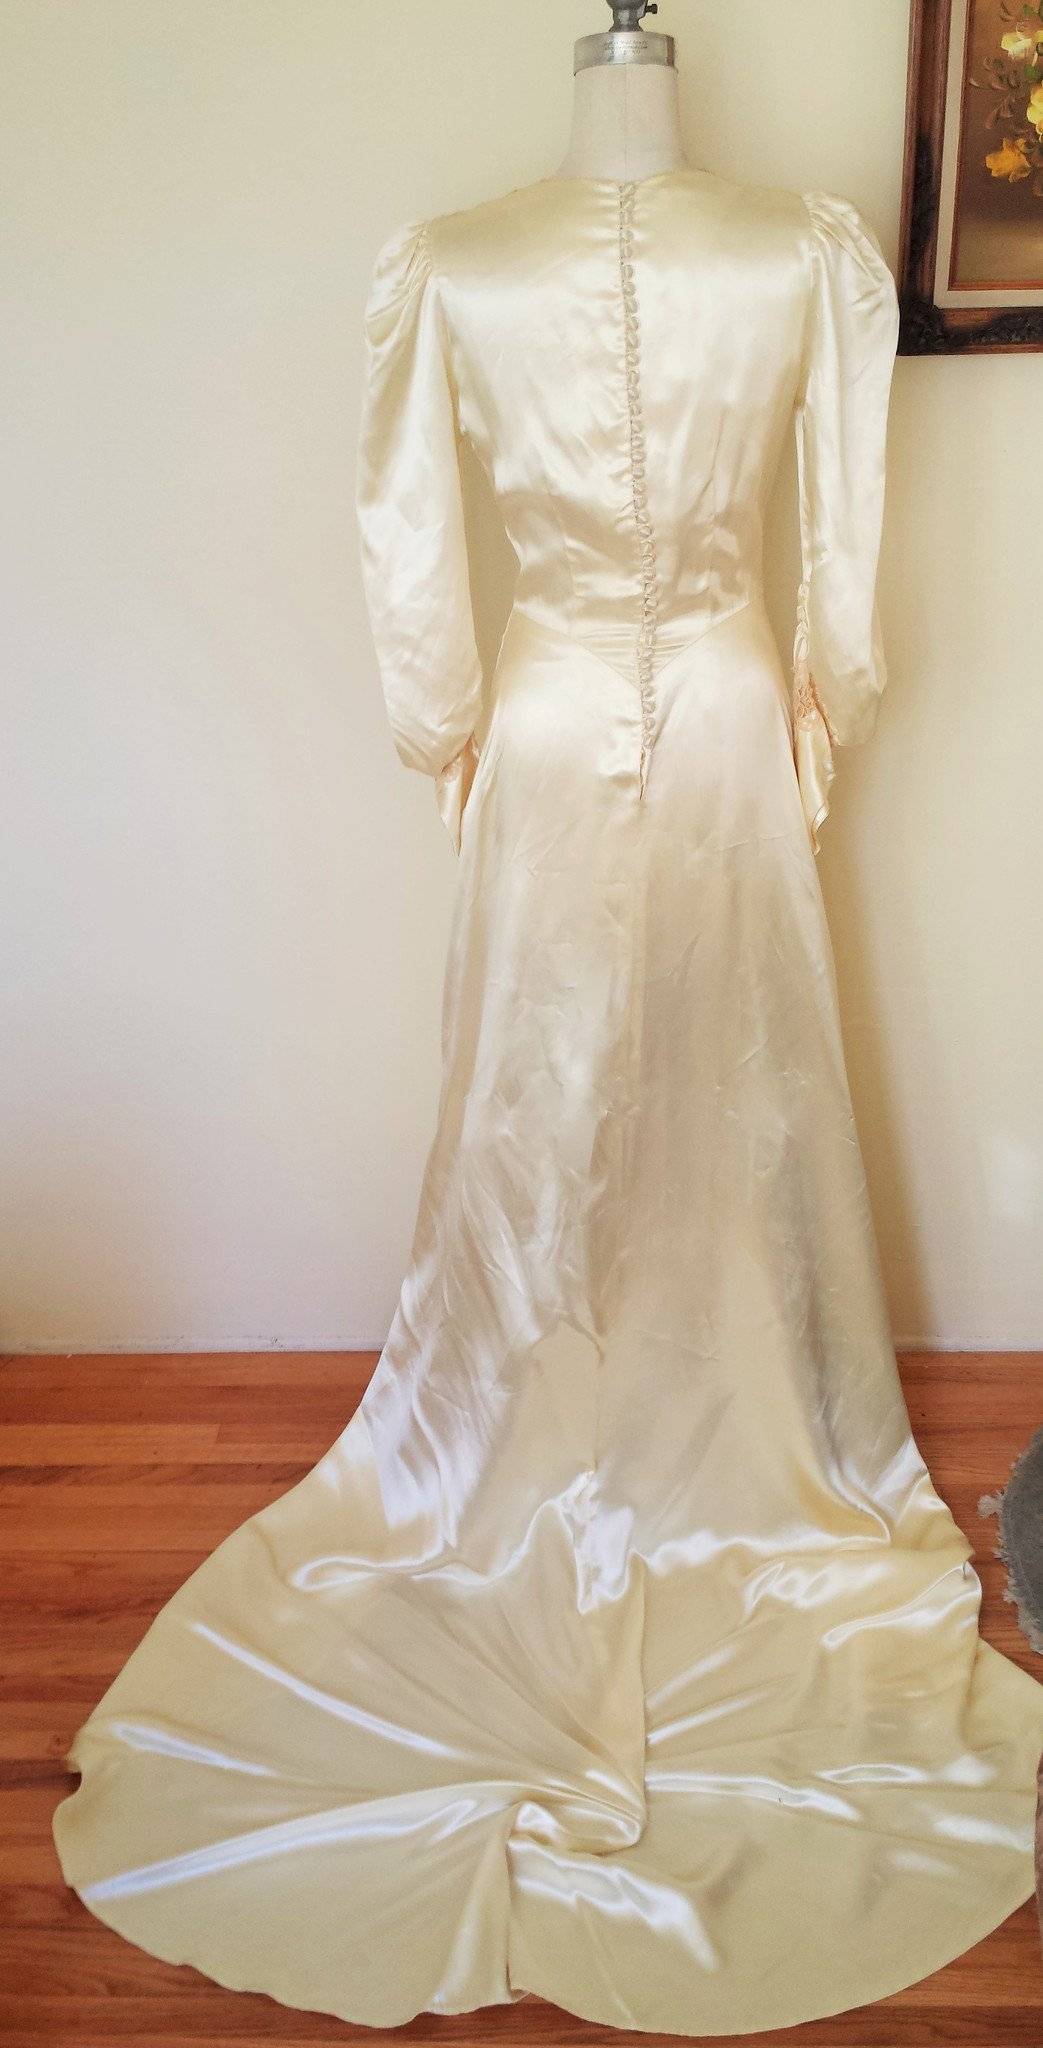 Wedding gowns through the decades